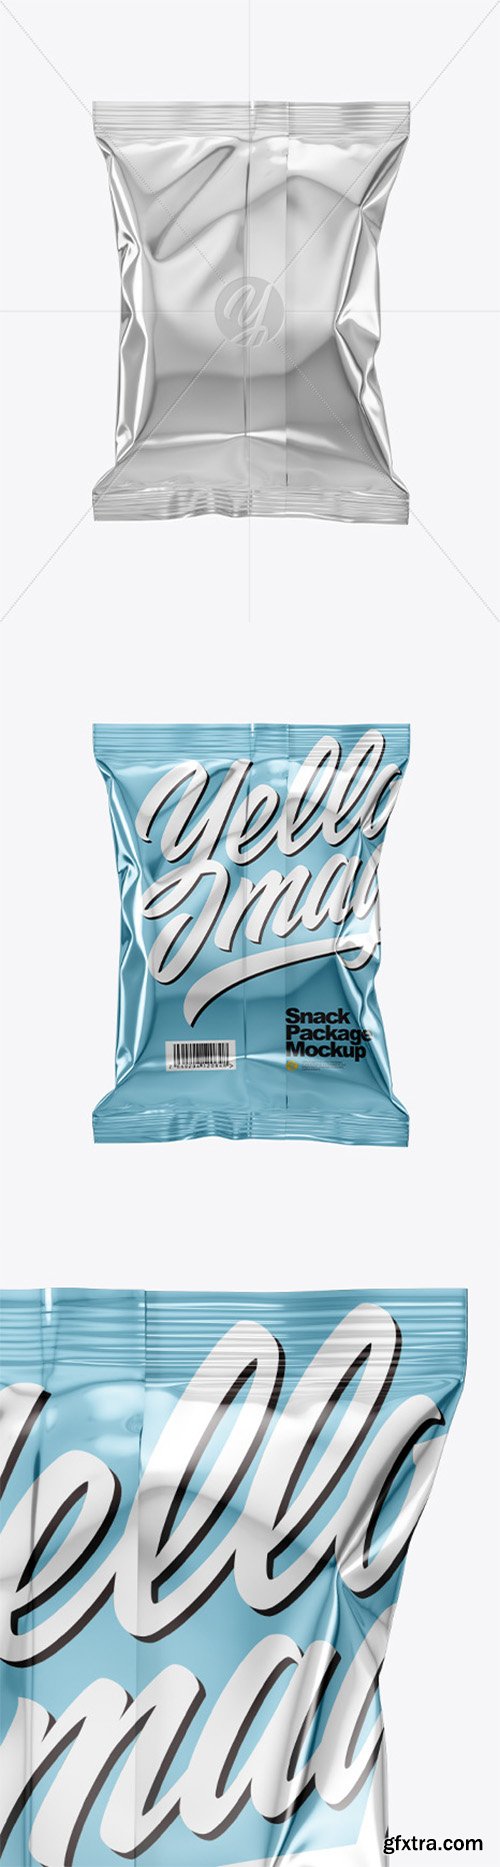 Metallic Snack Package Mockup - Back View 50597